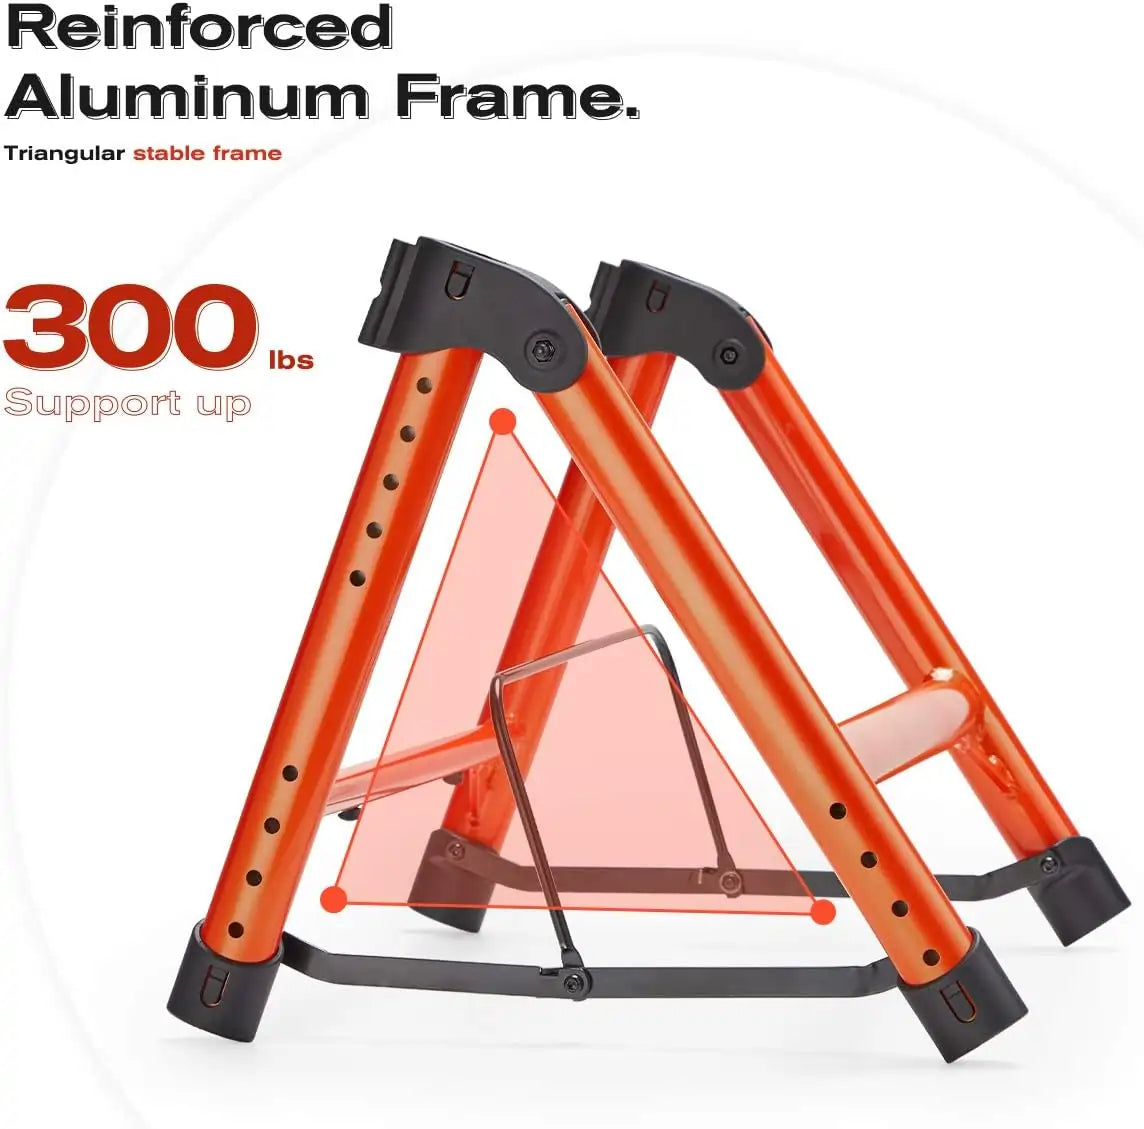 Reinforced Aluminum Frame